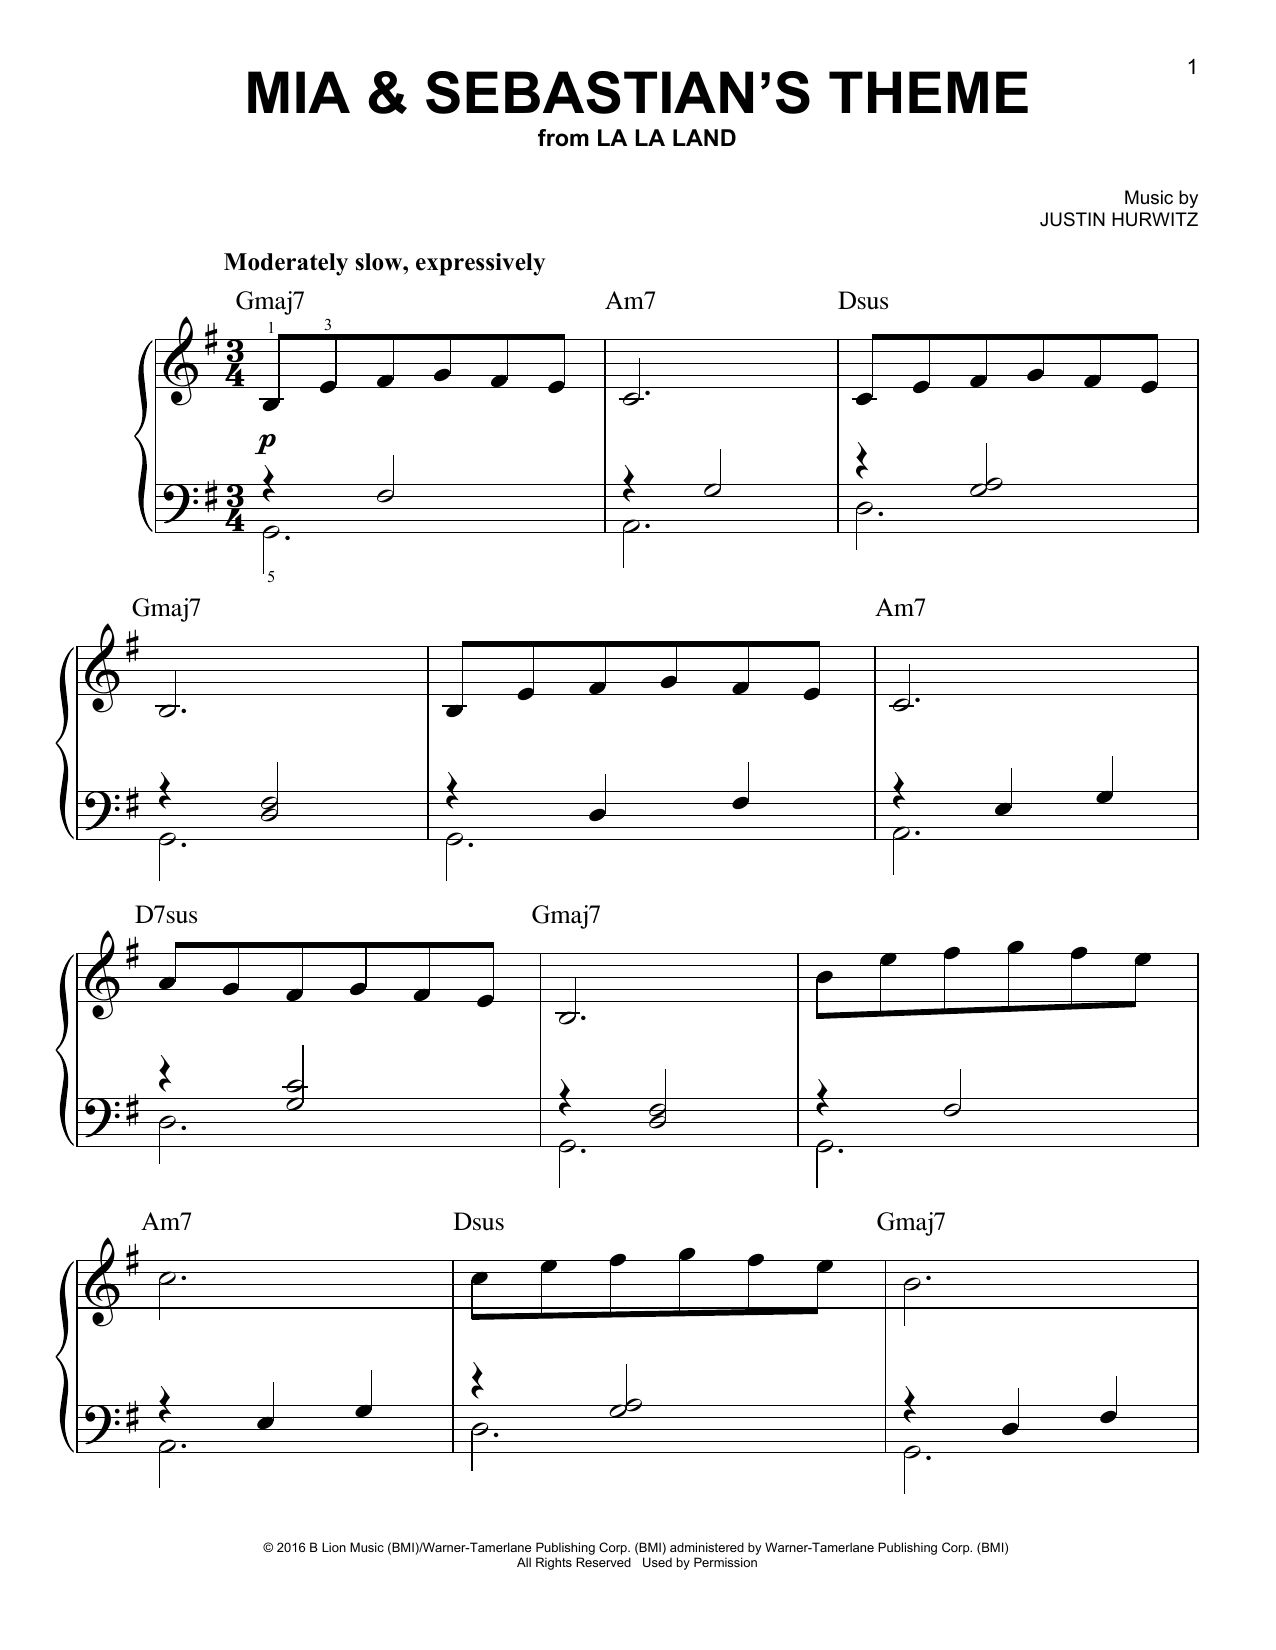 Justin Hurwitz Mia & Sebastian's Theme (from La La Land) Sheet Music Notes & Chords for Accordion - Download or Print PDF